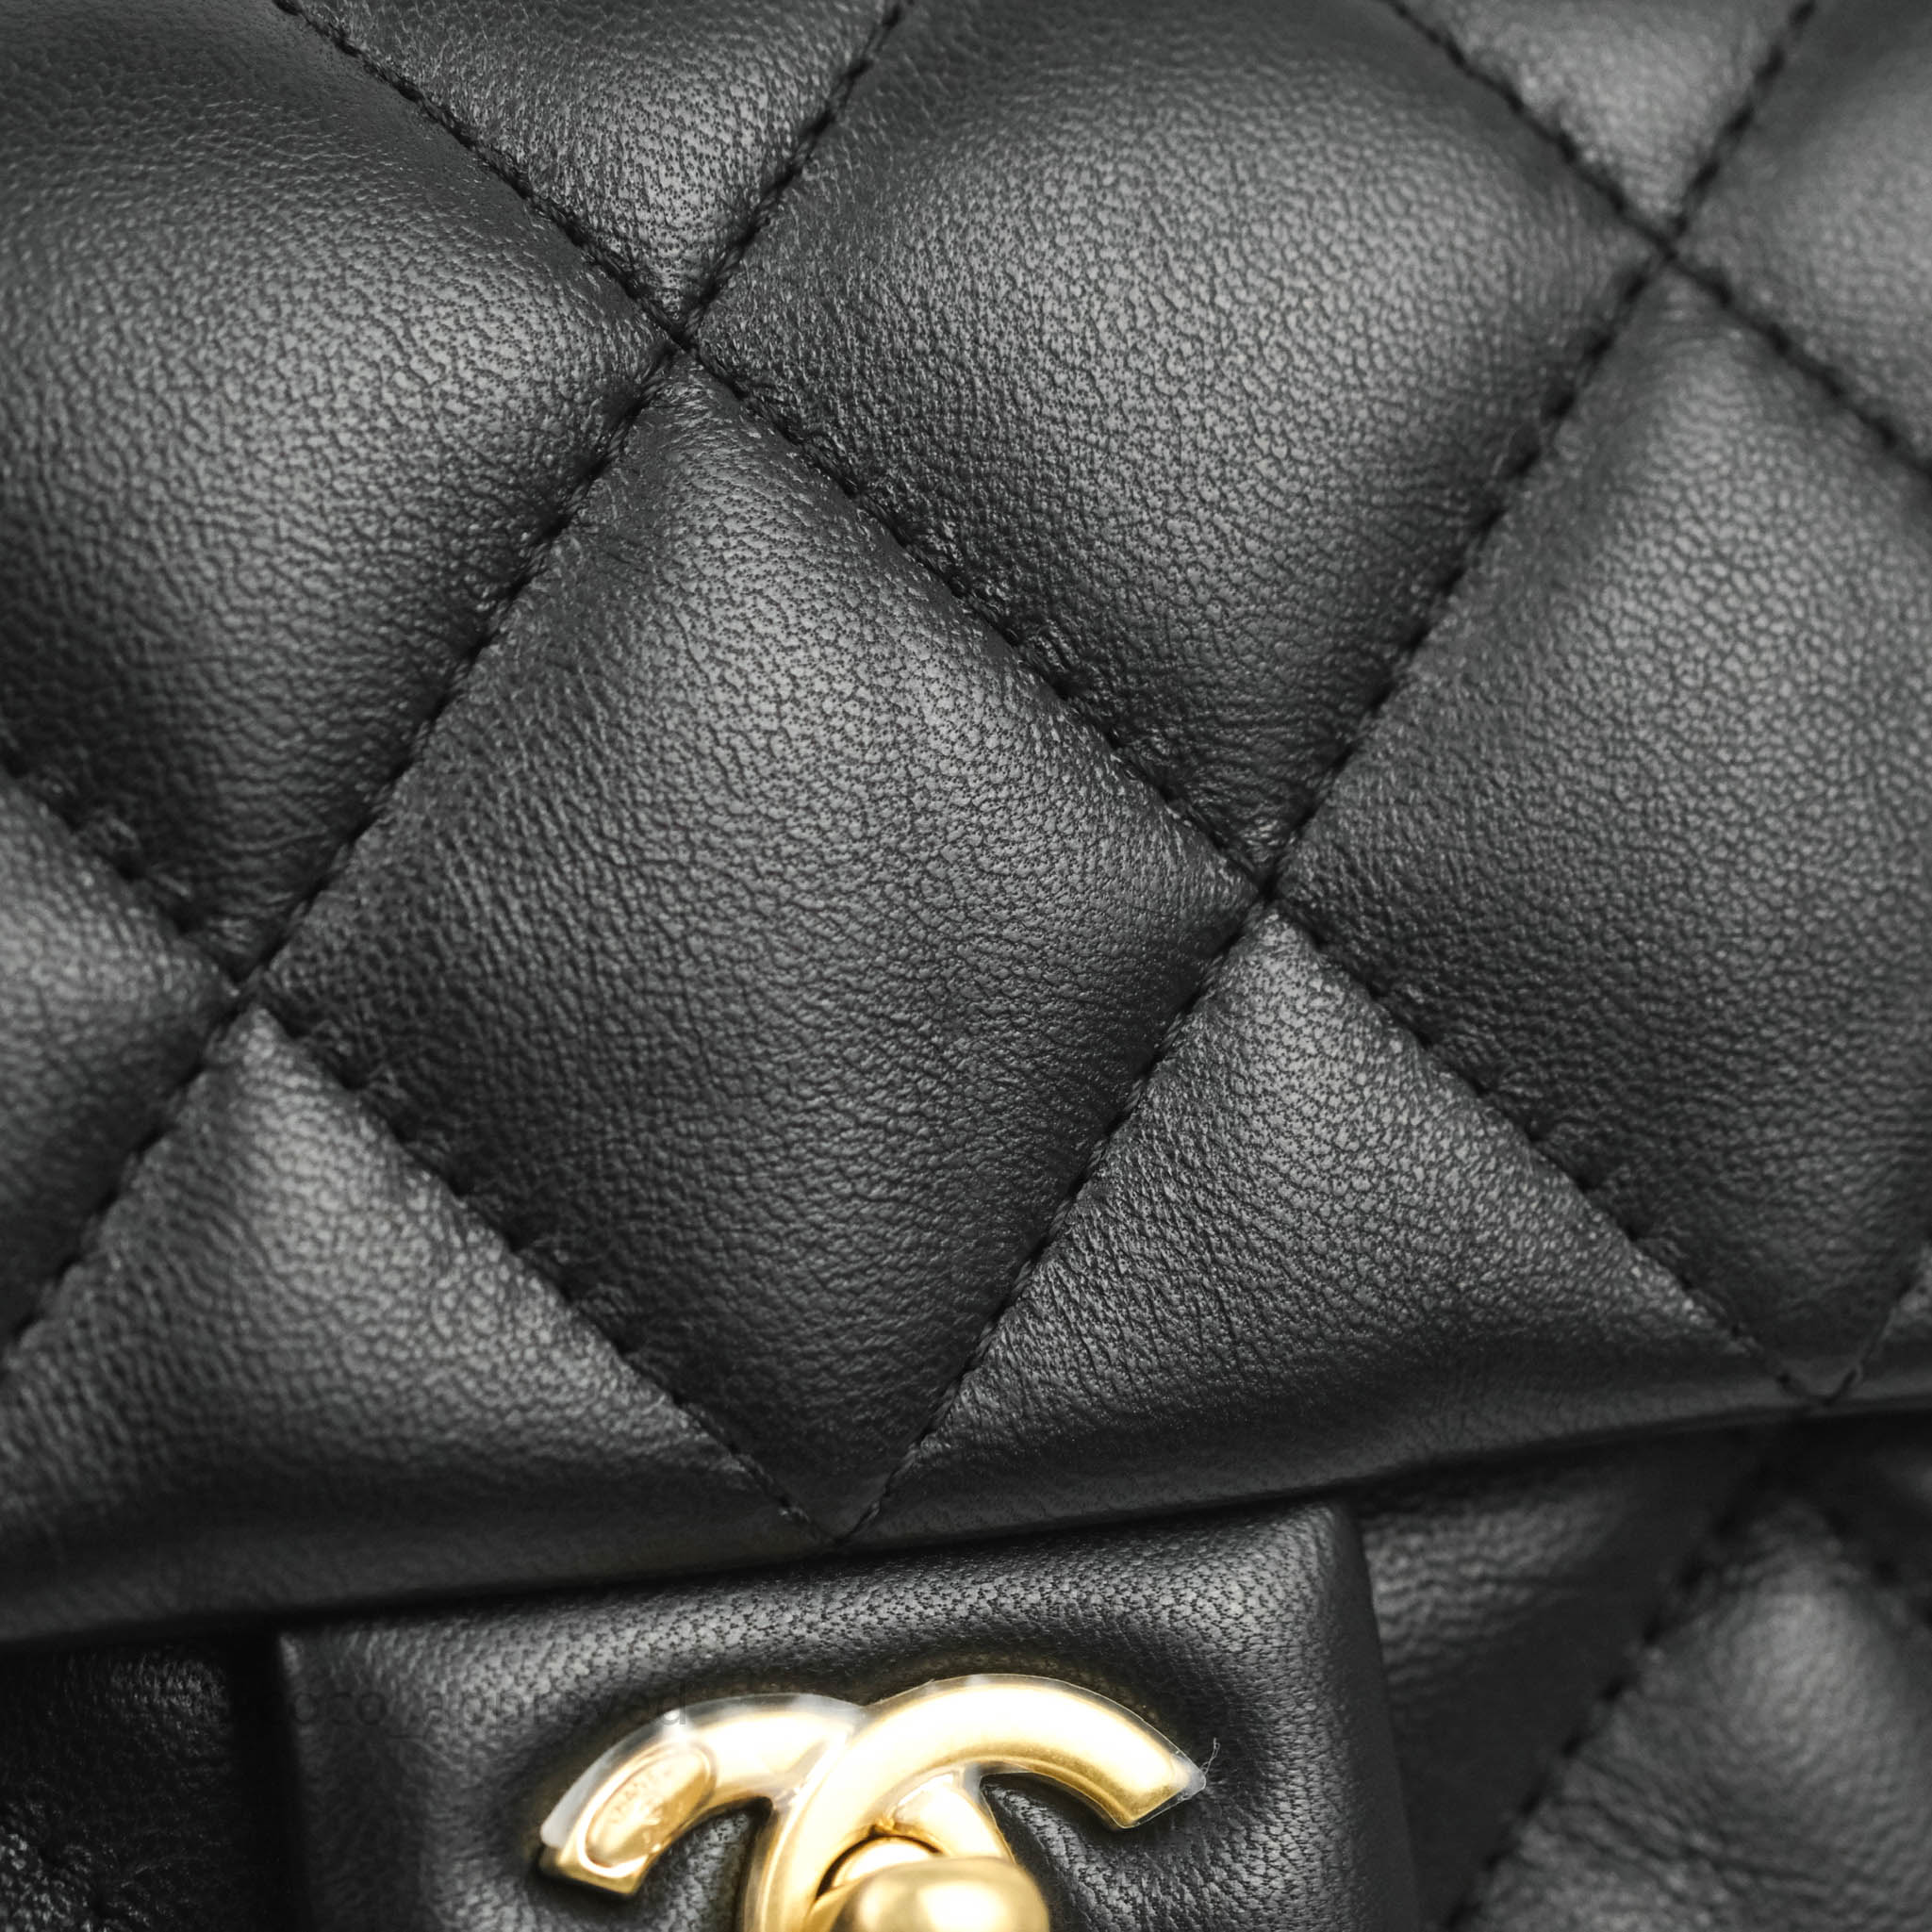 Chanel Mini Charms Flap Bag Black Lambskin Brushed Gold Hardware